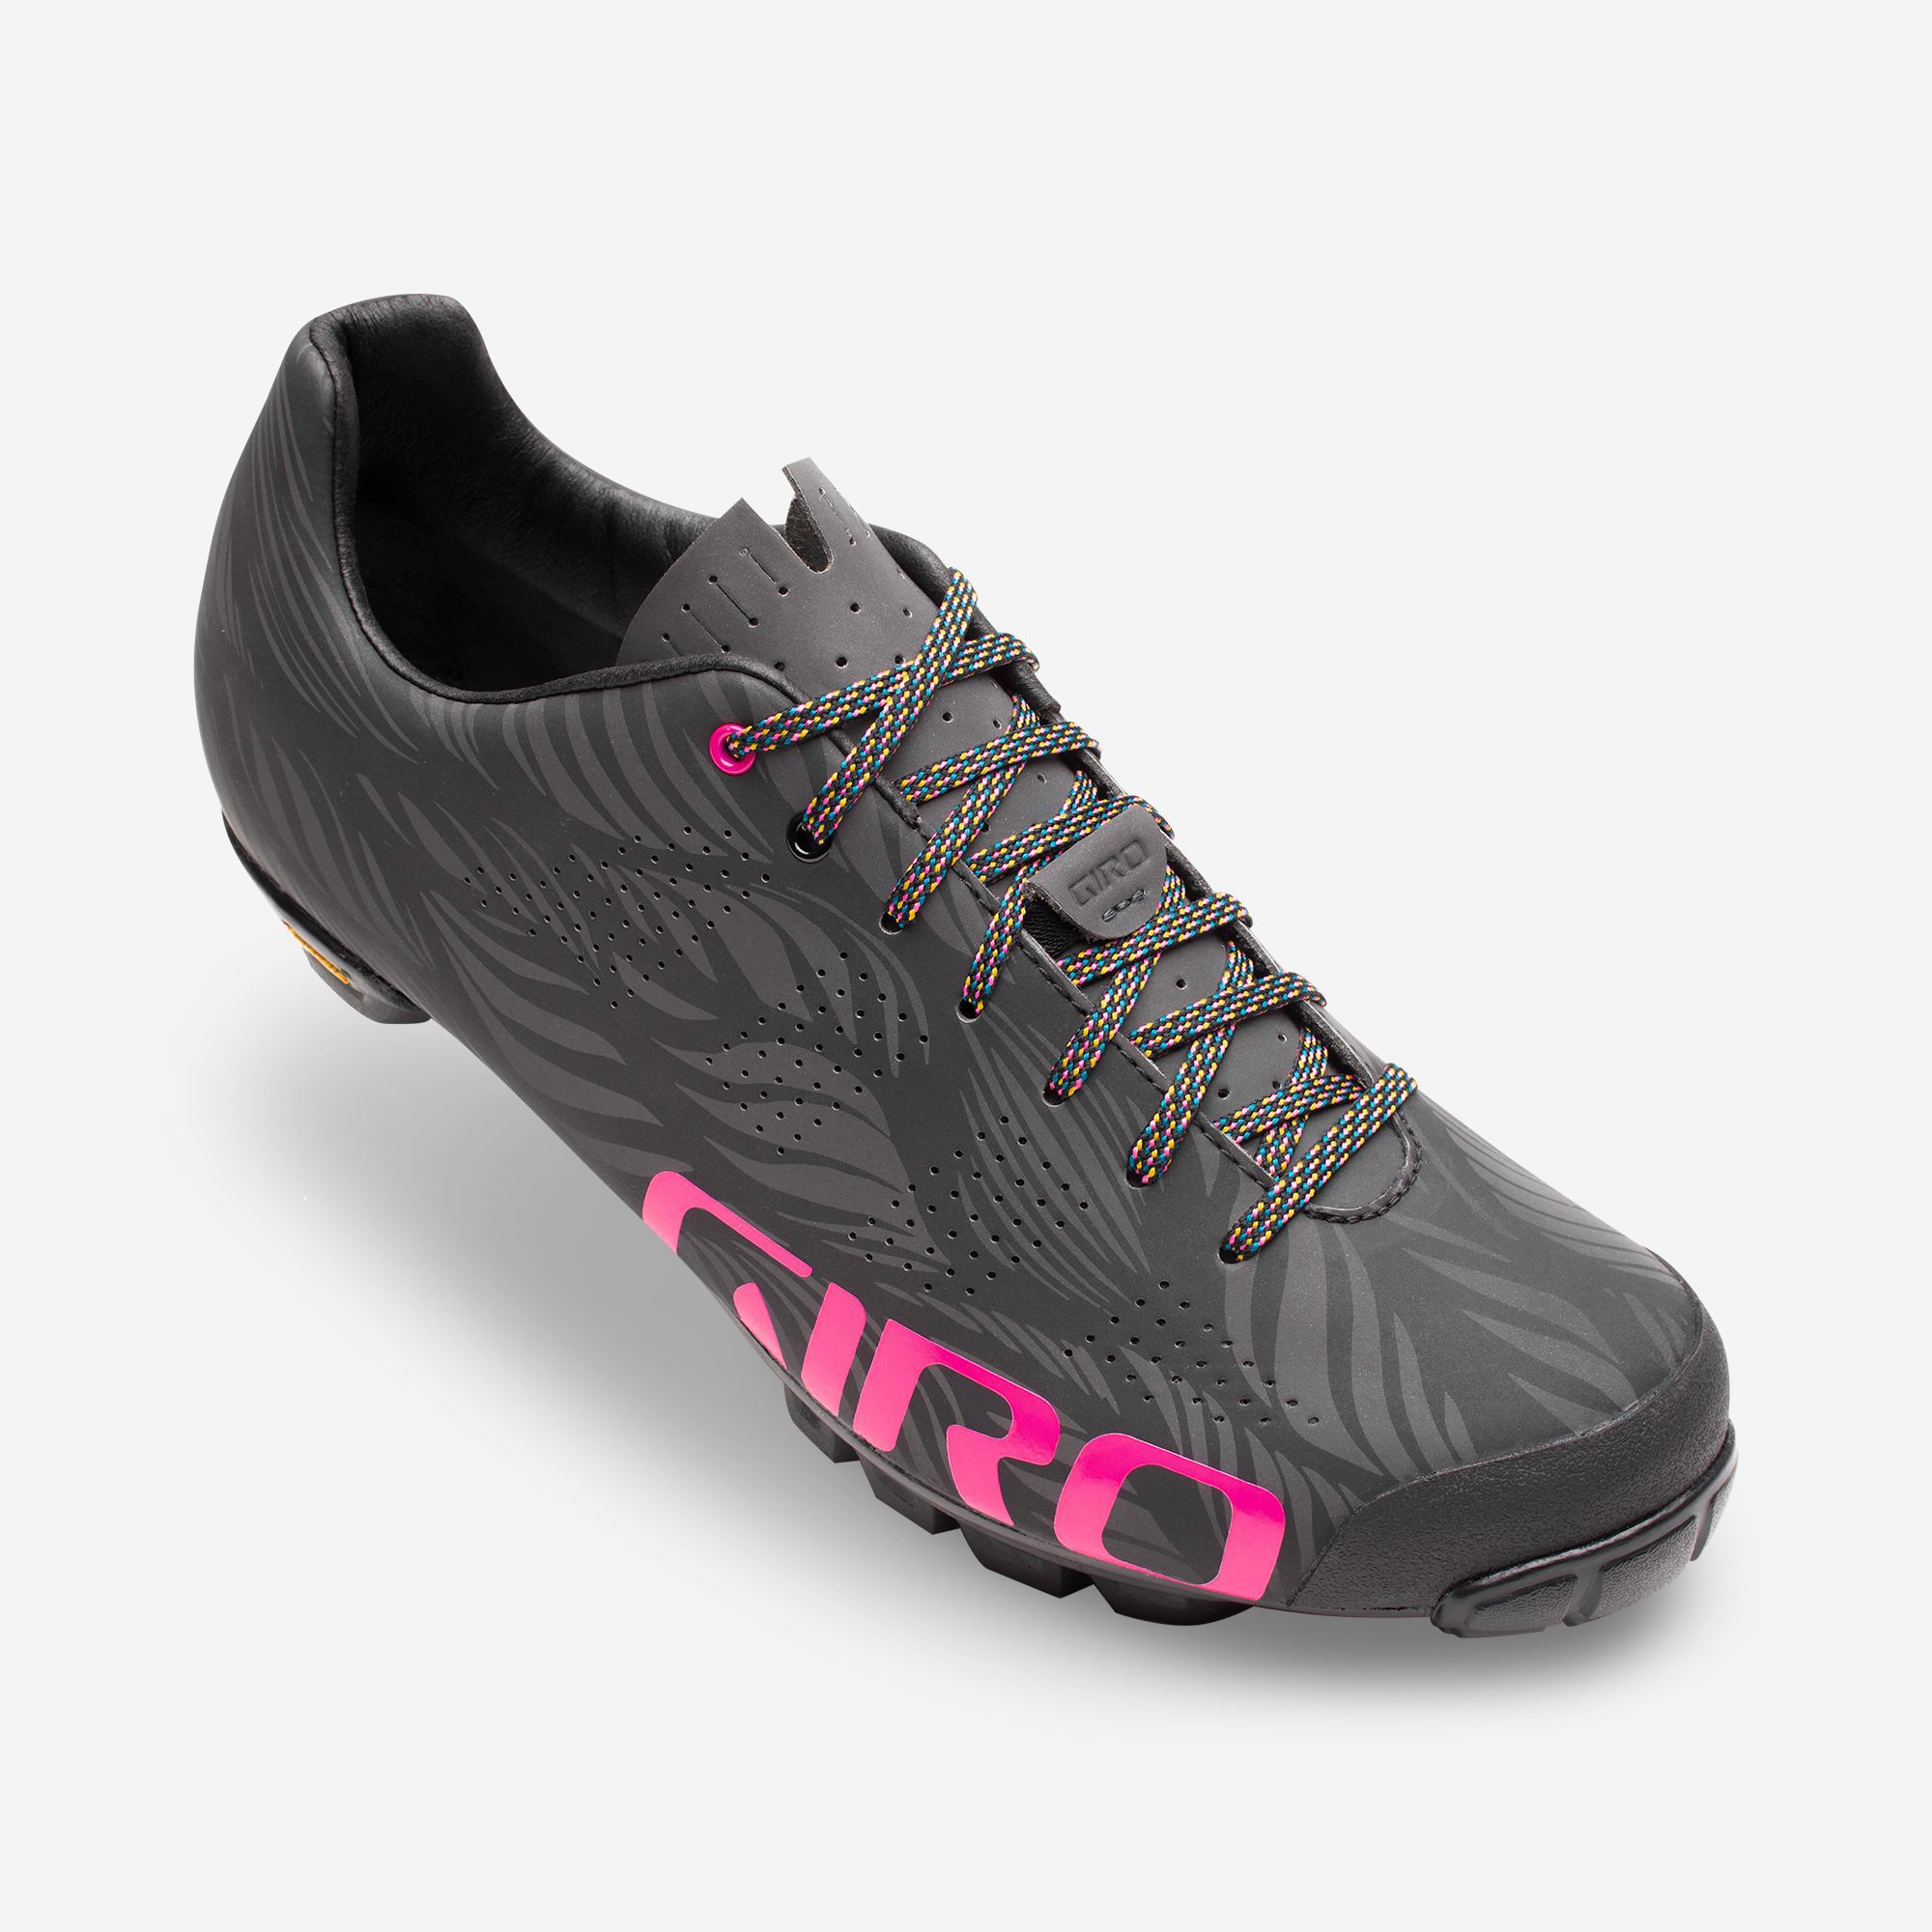 Details about   New LEFT SINGLE SHOE Giro Empire VR90 MTB Cycling Bike 42.5 9.25 Black Carbon 